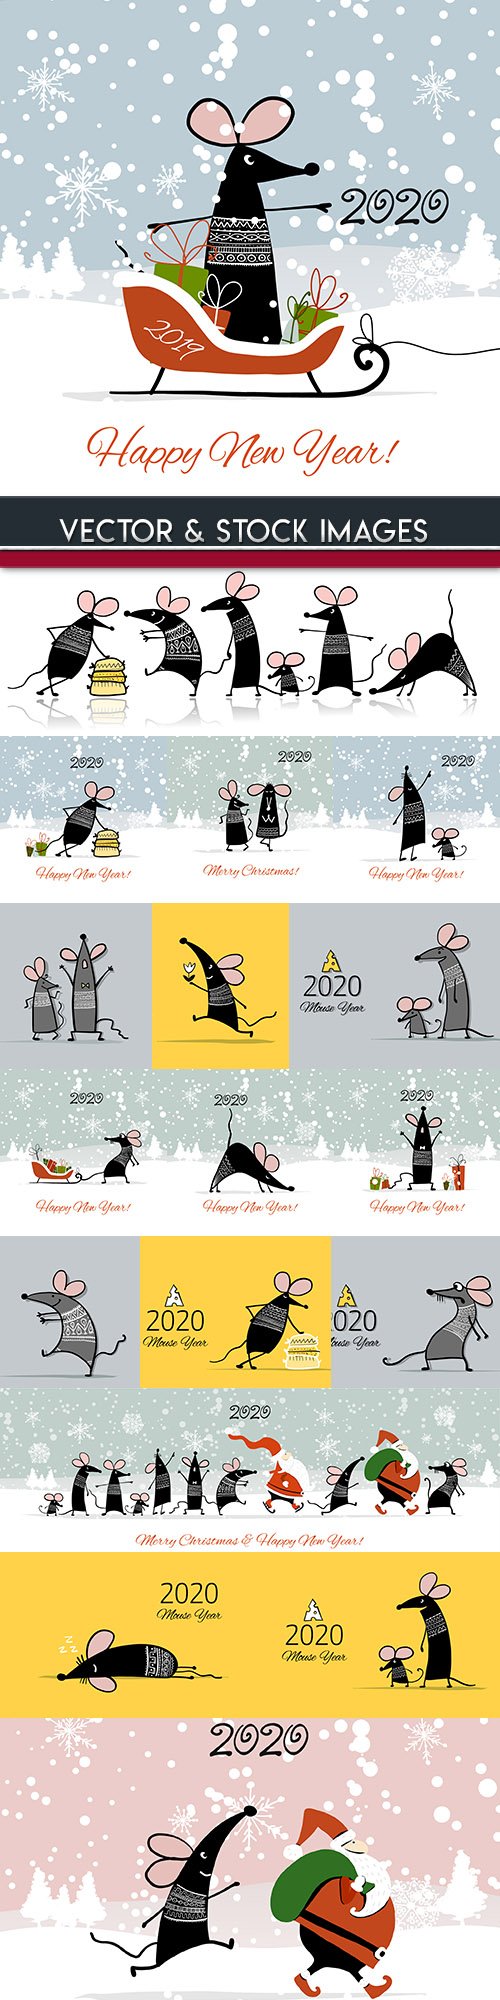 Rat funny symbol of New Year 2020 illustration 10